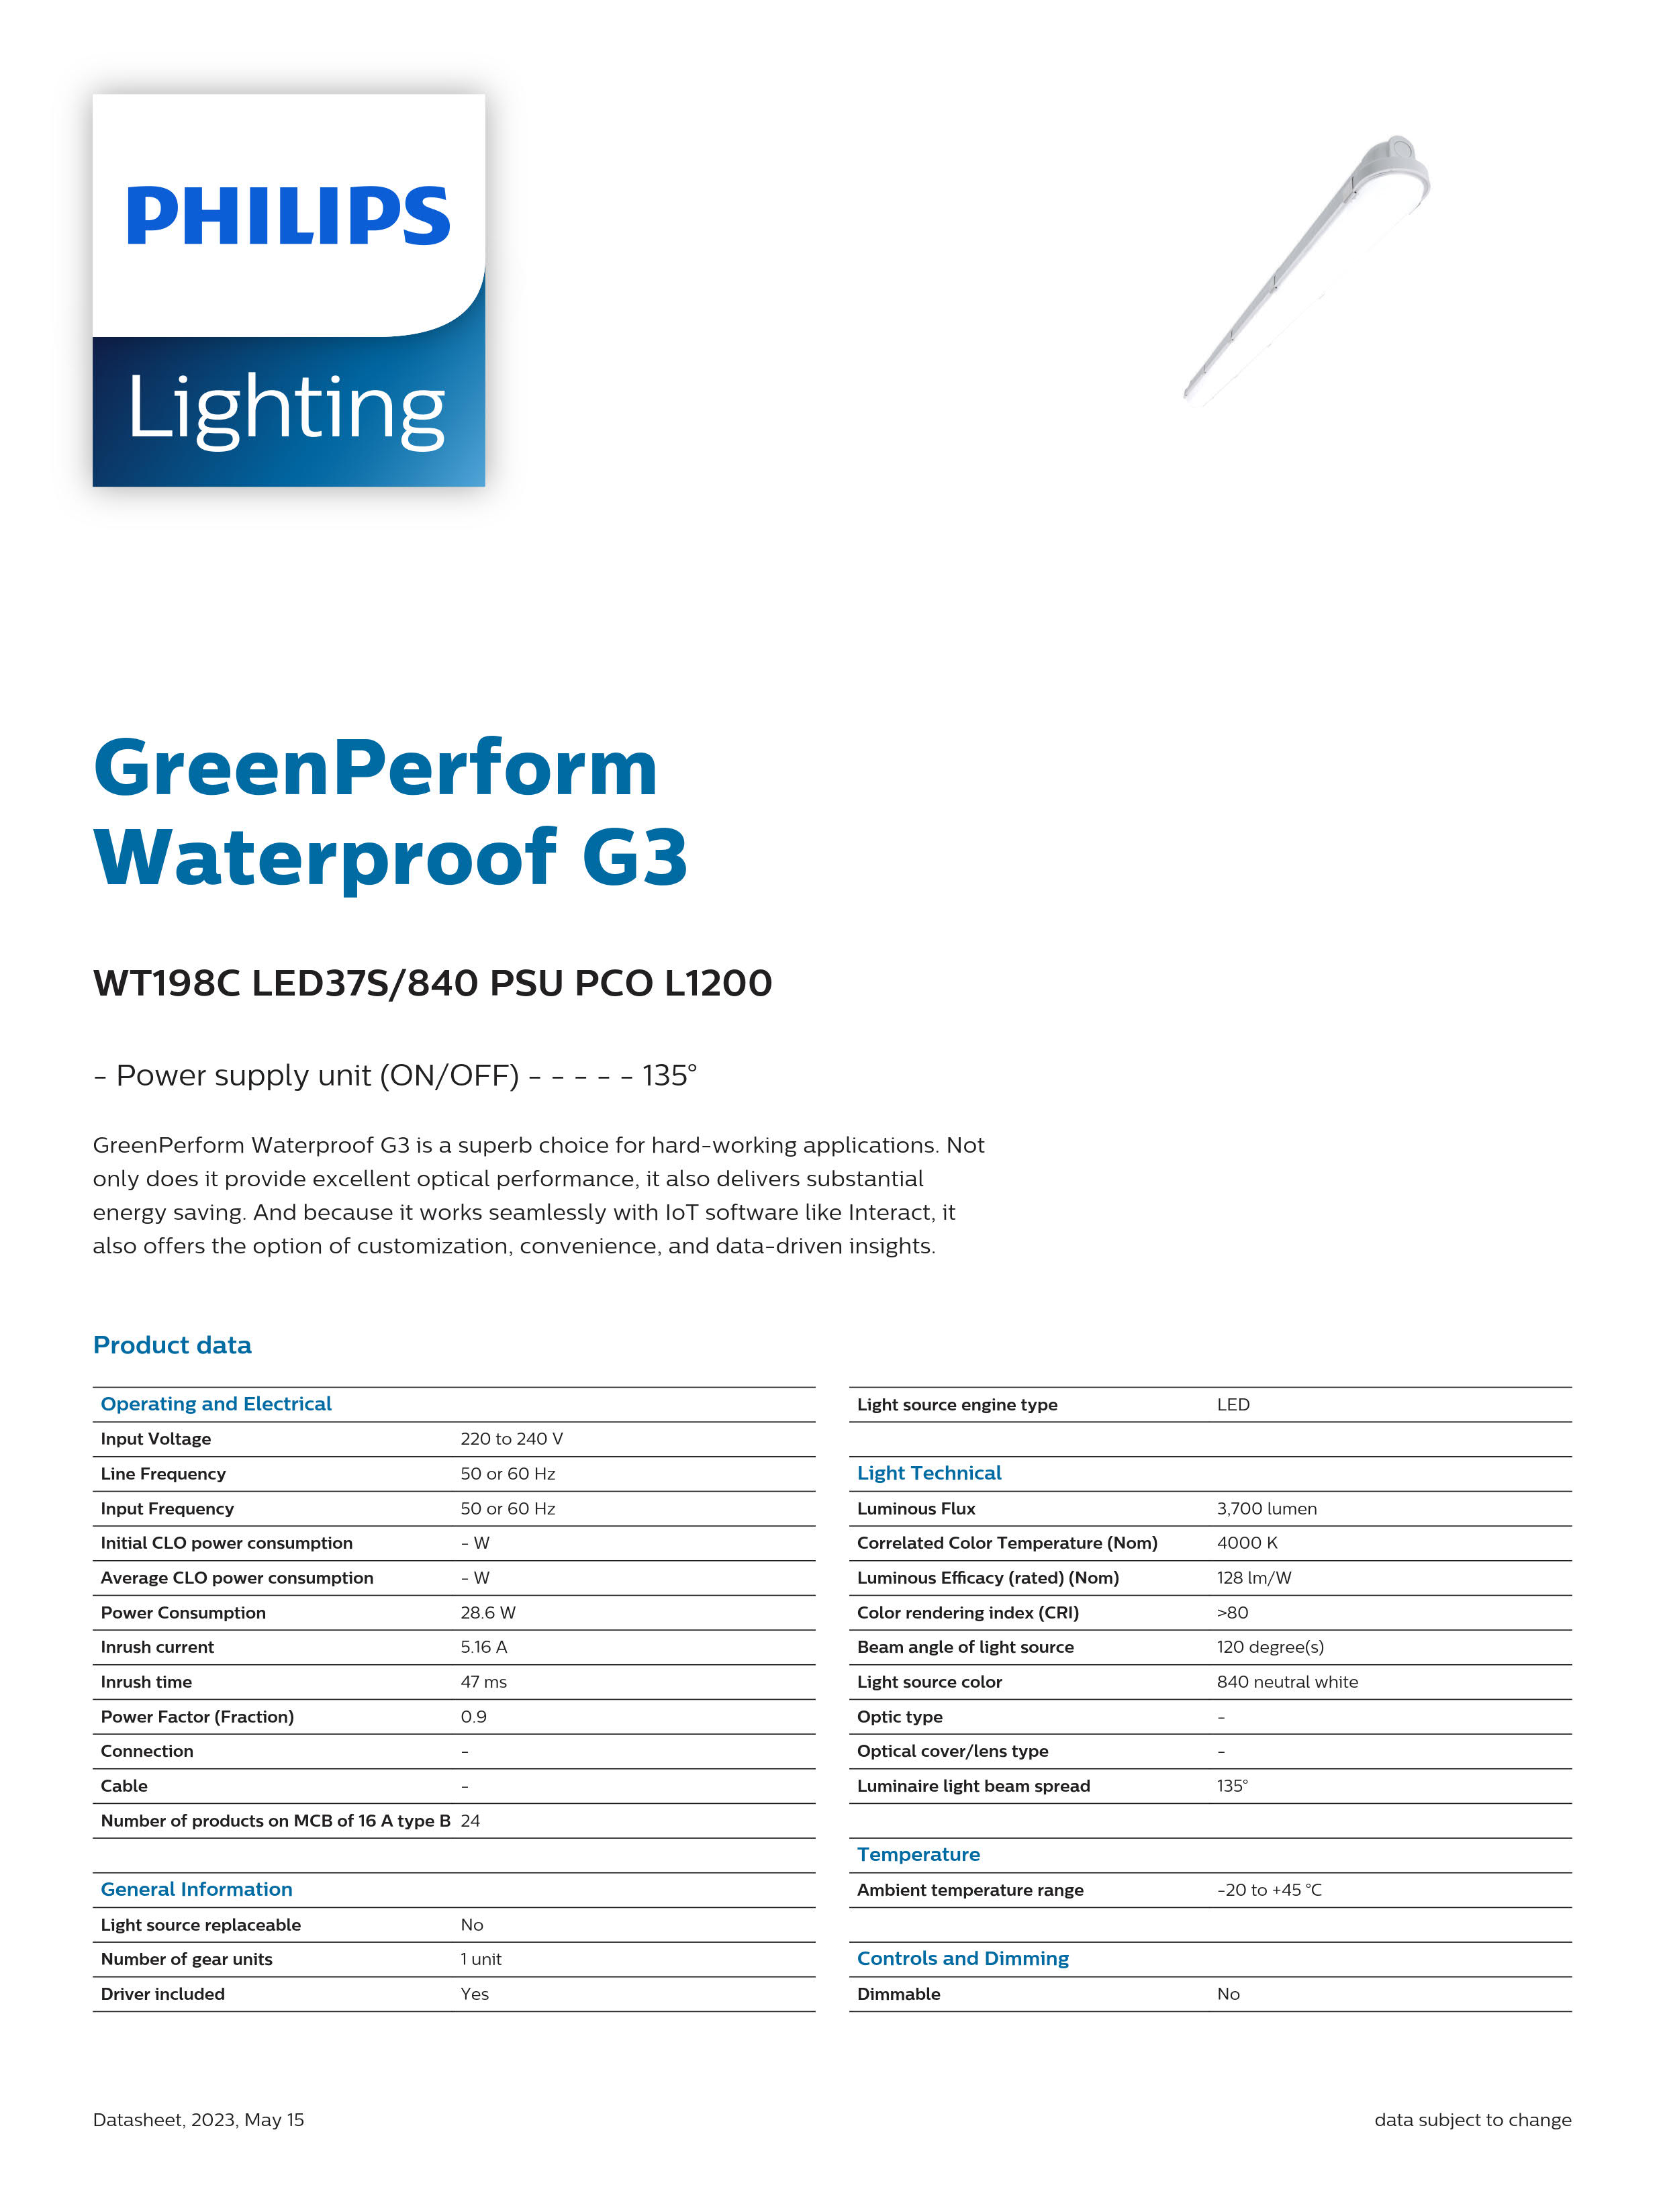 PHILIPS Waterproof WT198C LED37S/840 PSU PCO L1200 911401826380